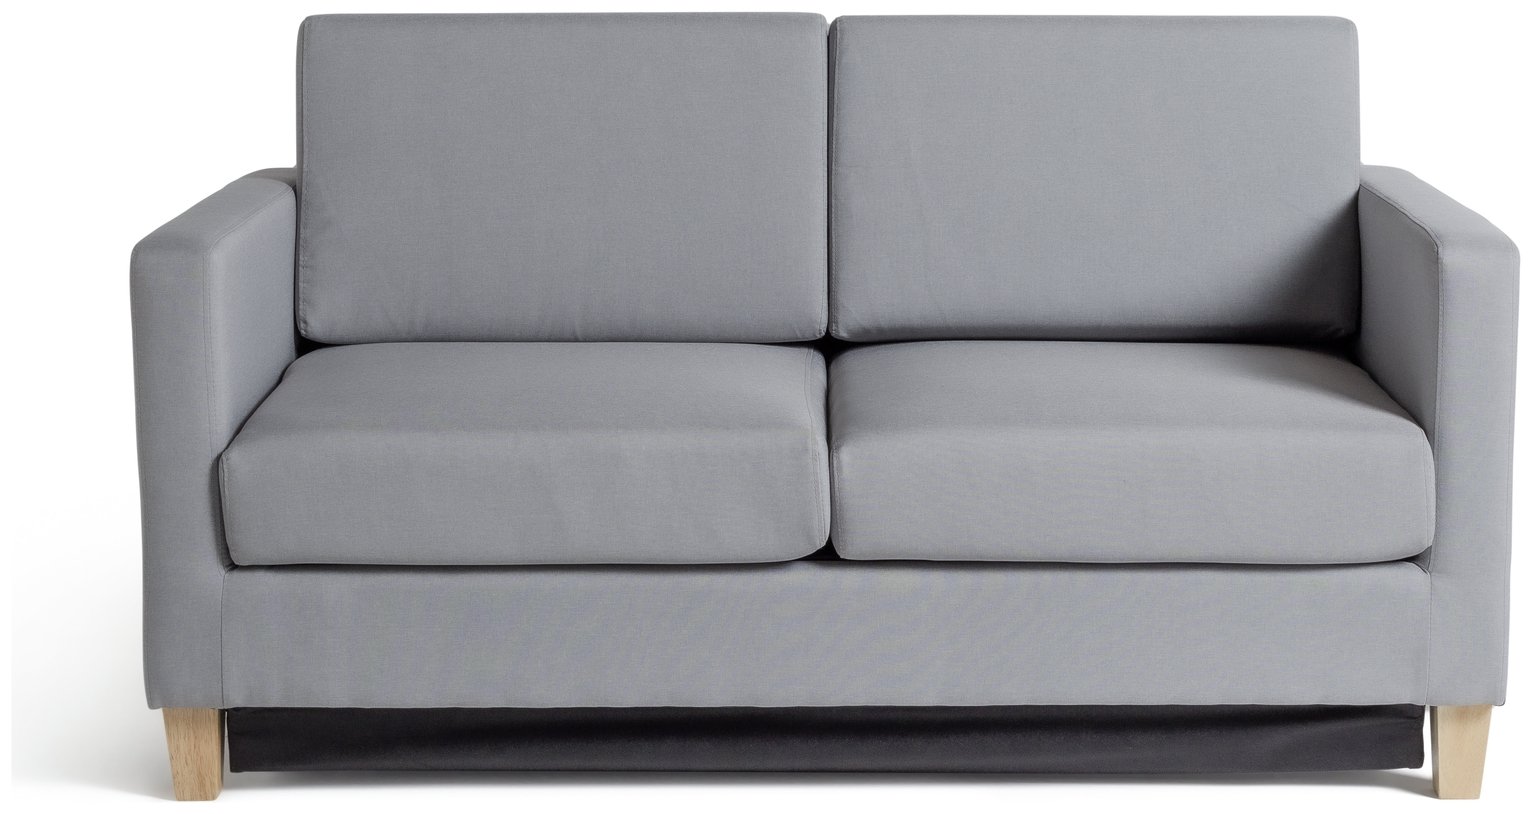 Argos Home Rosie 2 Seater Fabric Sofa Bed Light Grey